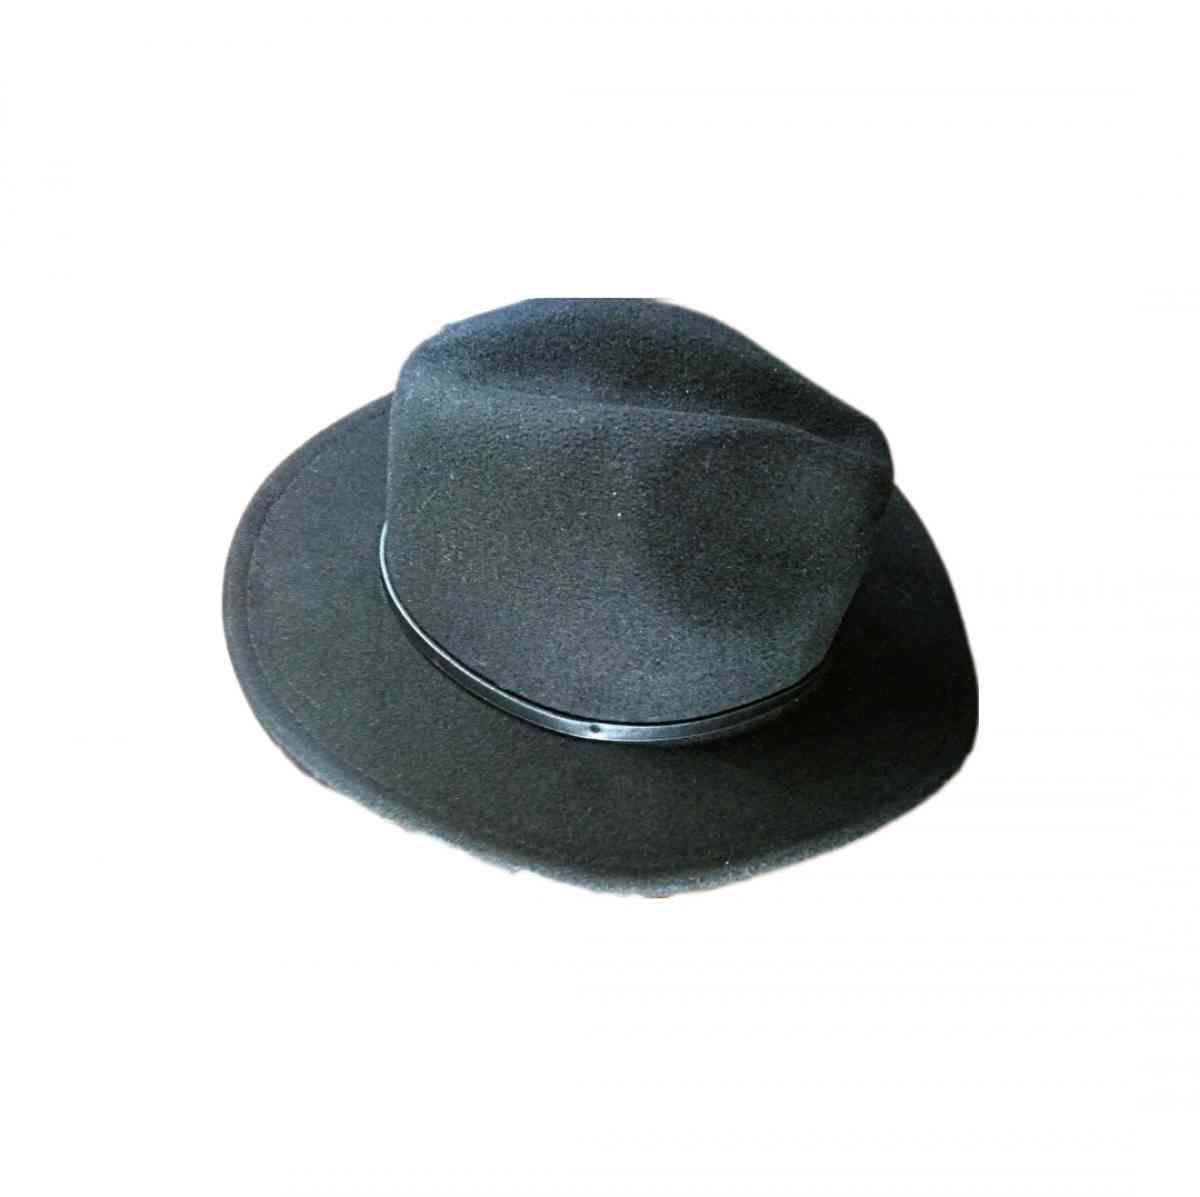 Unisex Black Fedora Hat